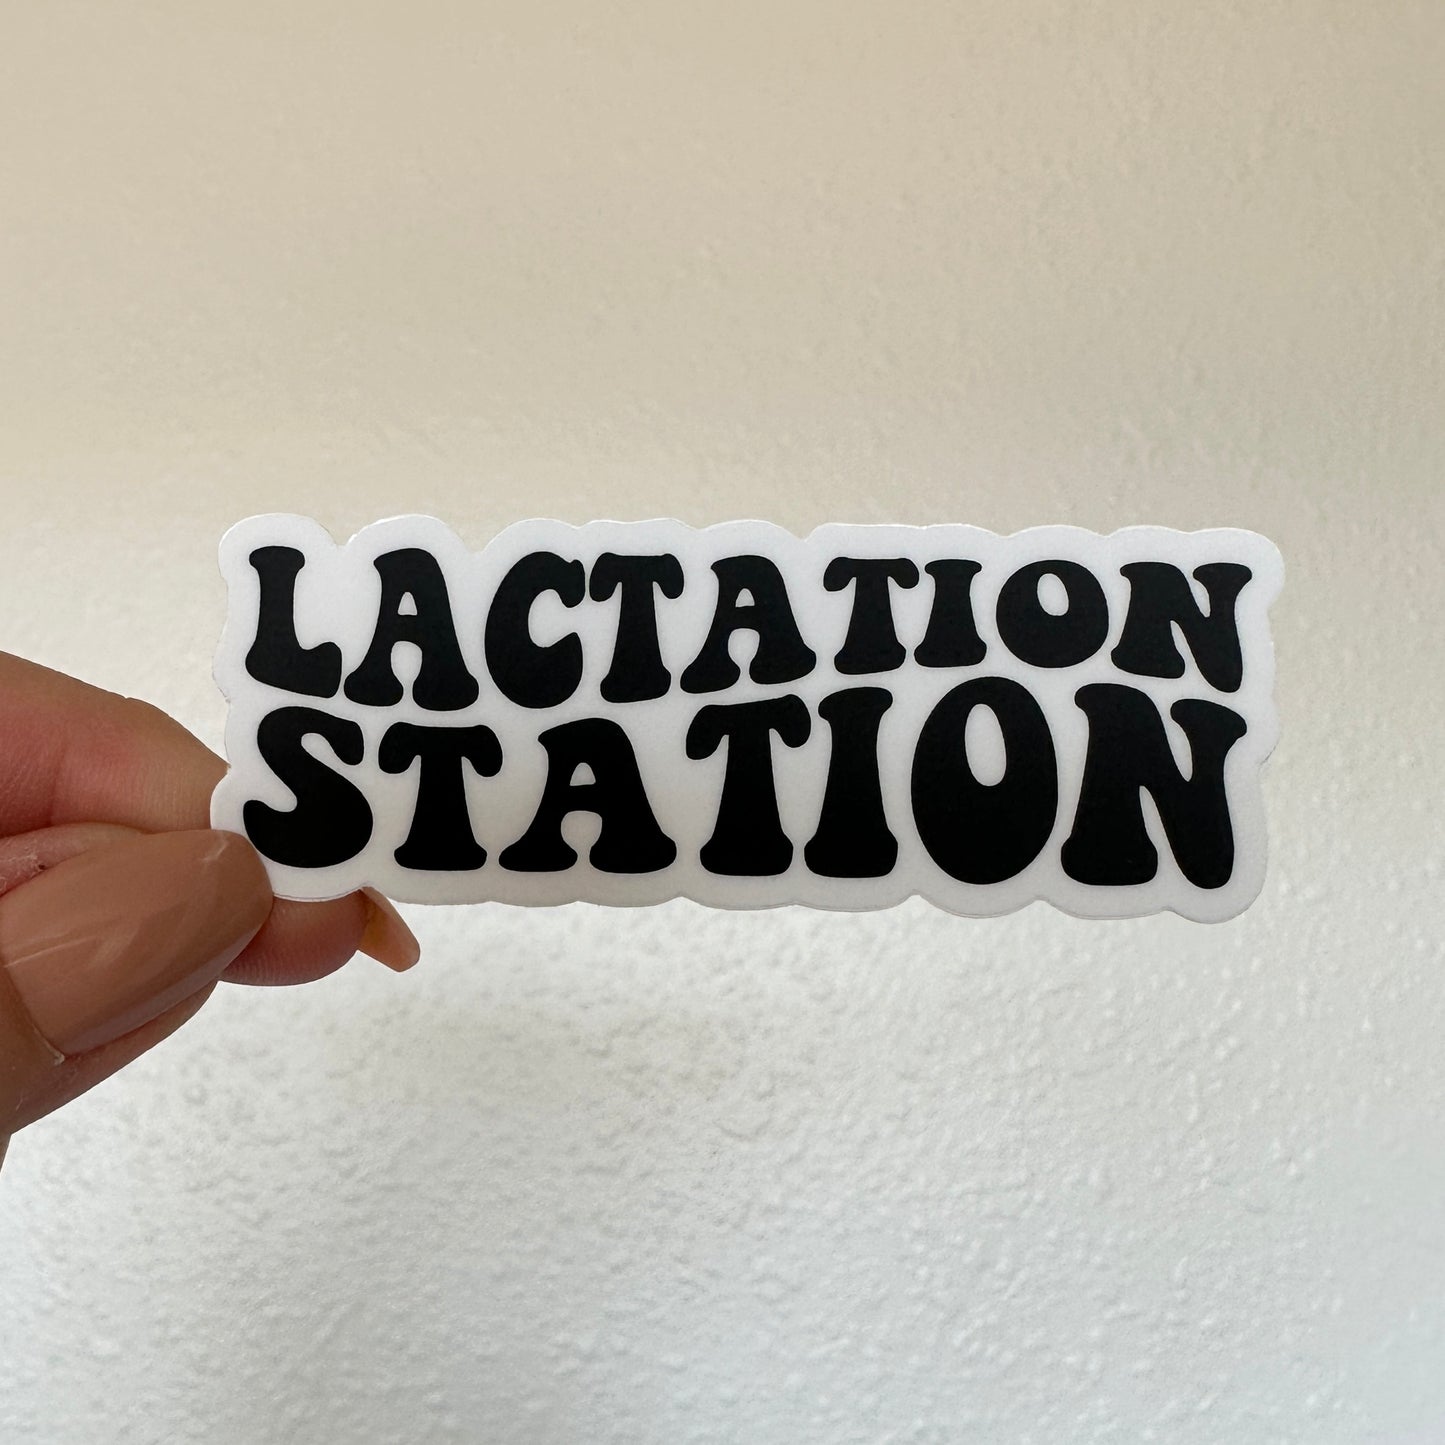 Lactation Station sticker